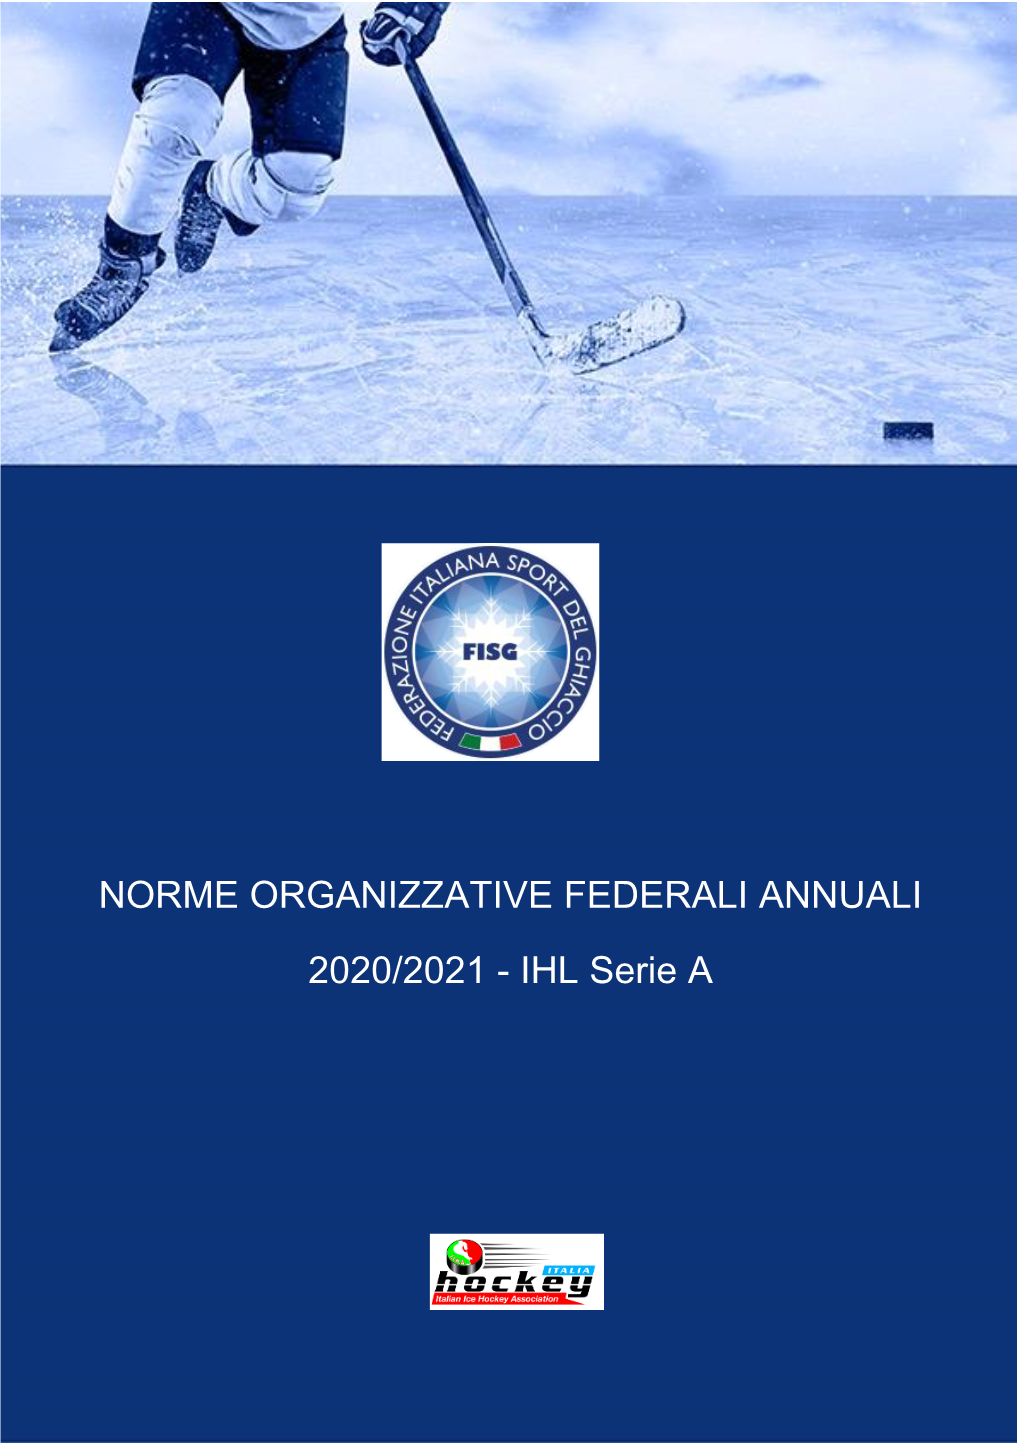 NORME ORGANIZZATIVE FEDERALI ANNUALI 2020/2021 - IHL Serie A